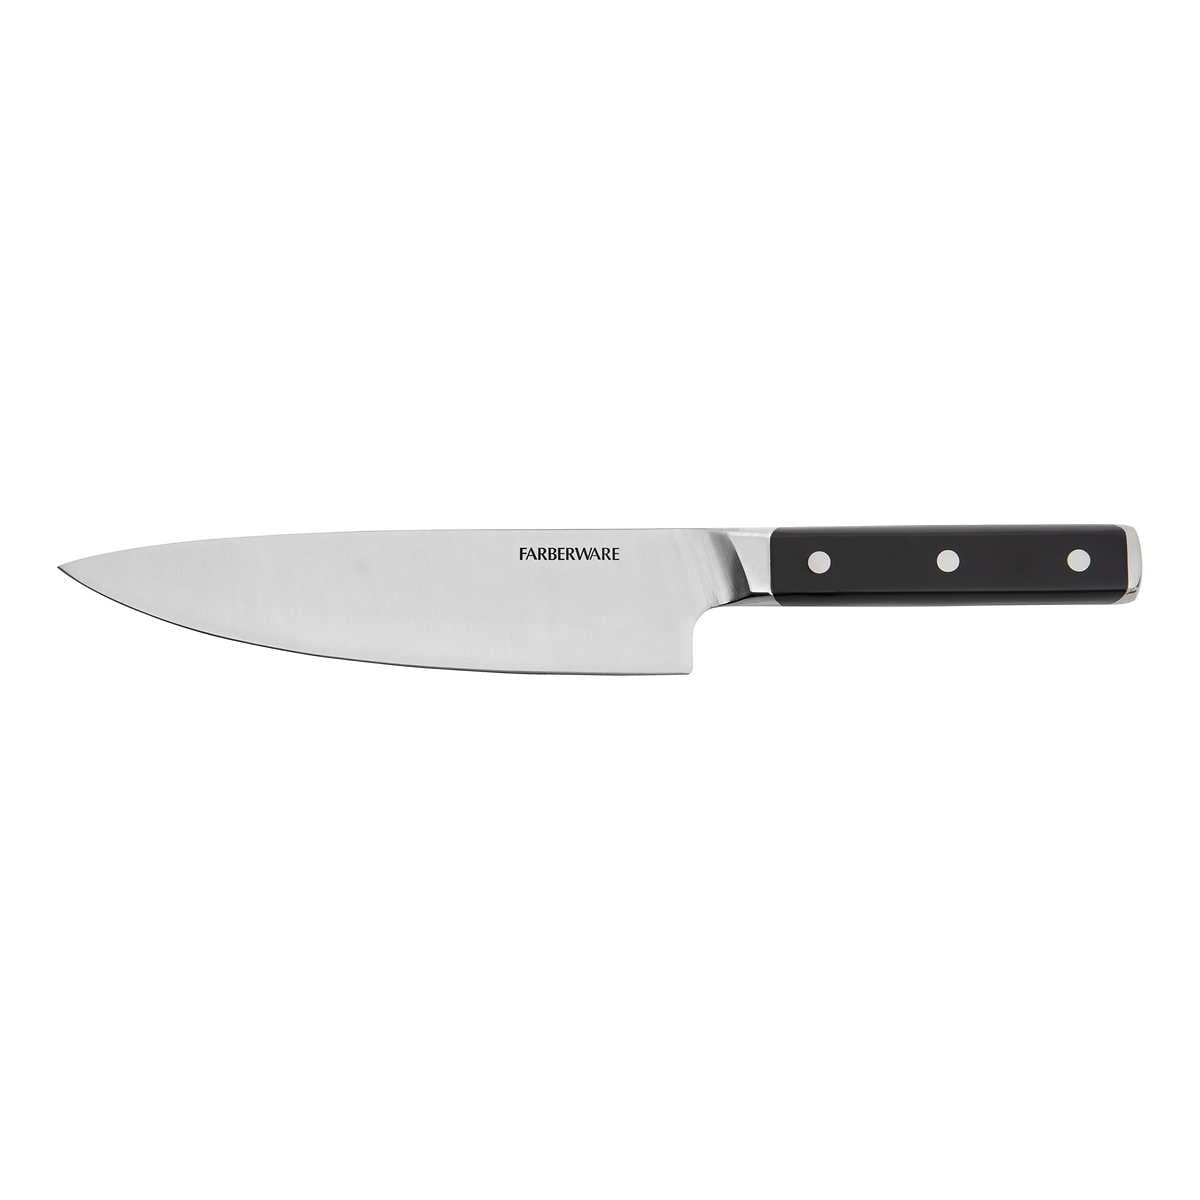 Farberware EdgeKeeper Cutlery Paring Knife - Shop Knives at H-E-B